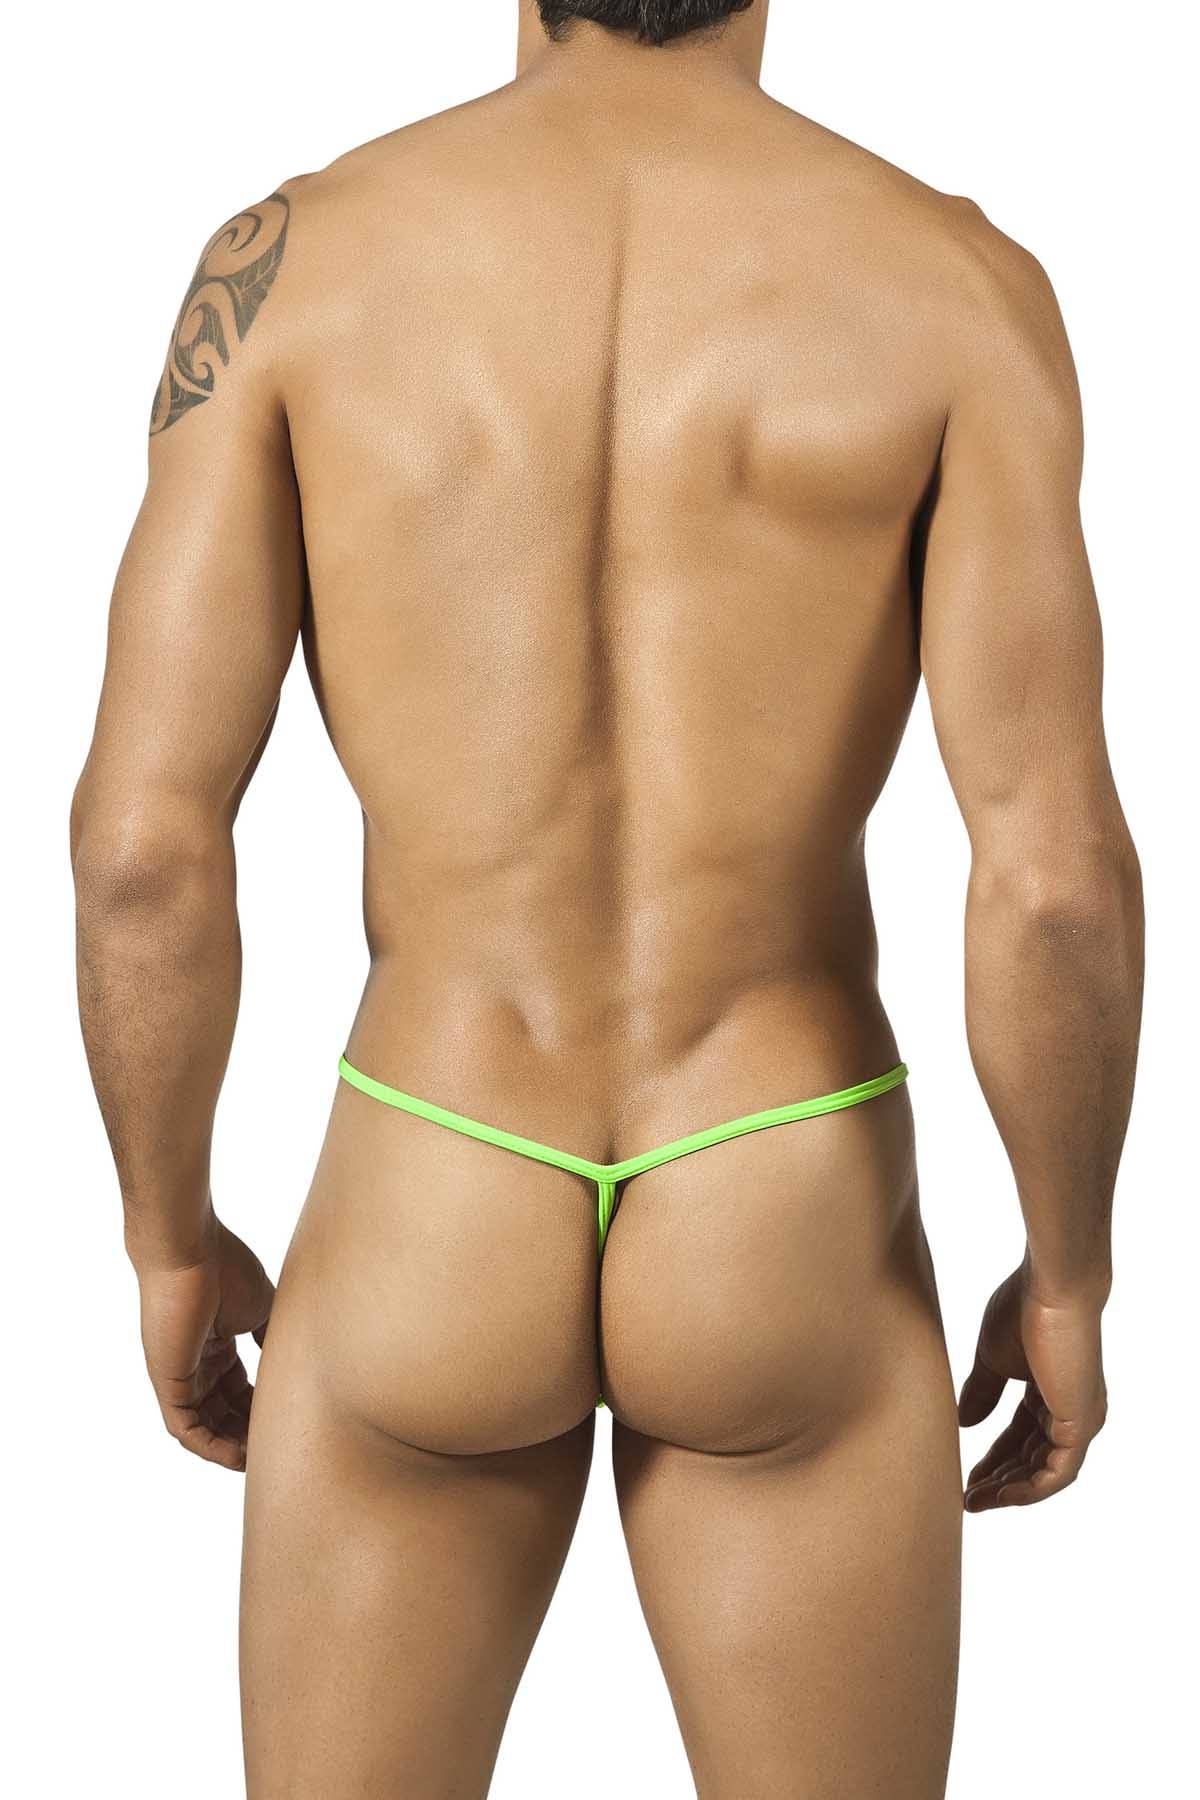 Candyman Hot-Green Thong